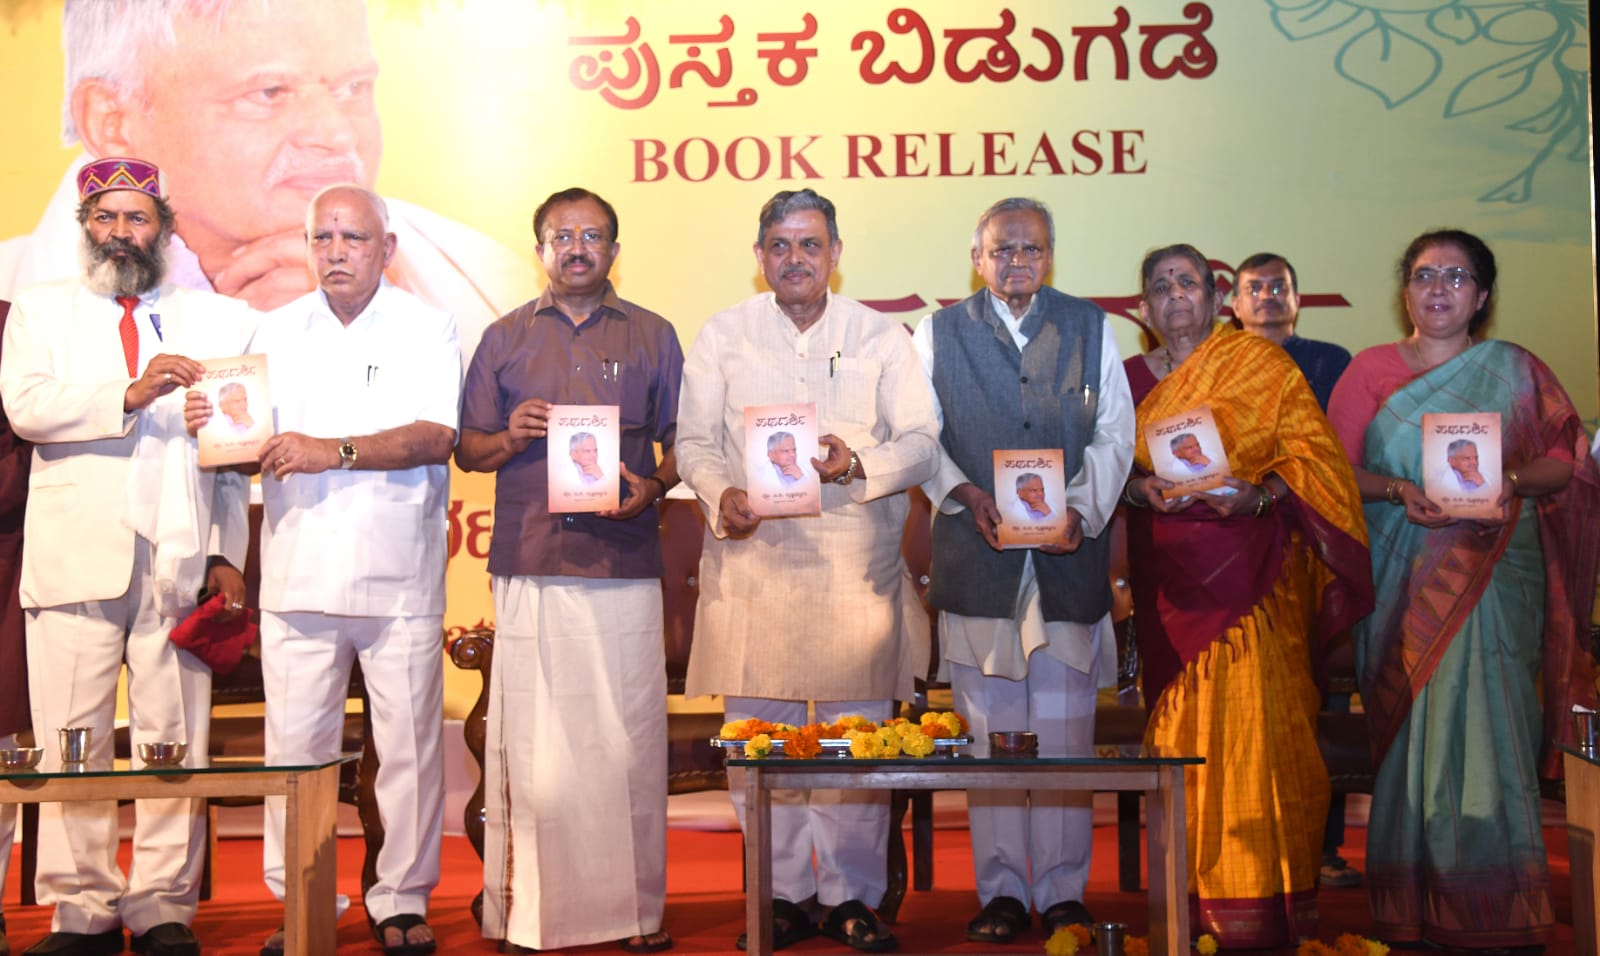 Pathdarshi Book release